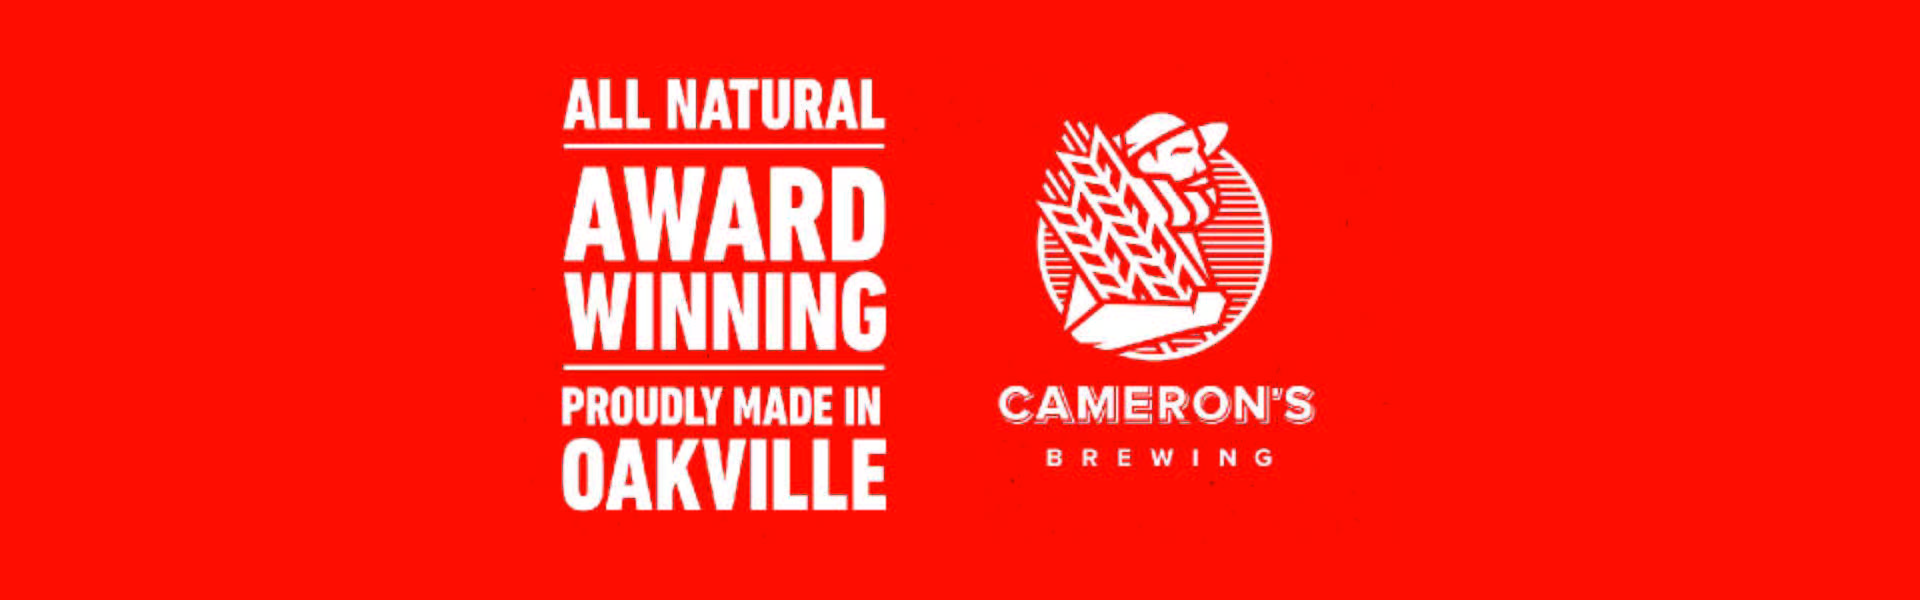 Camerons Brewing Company